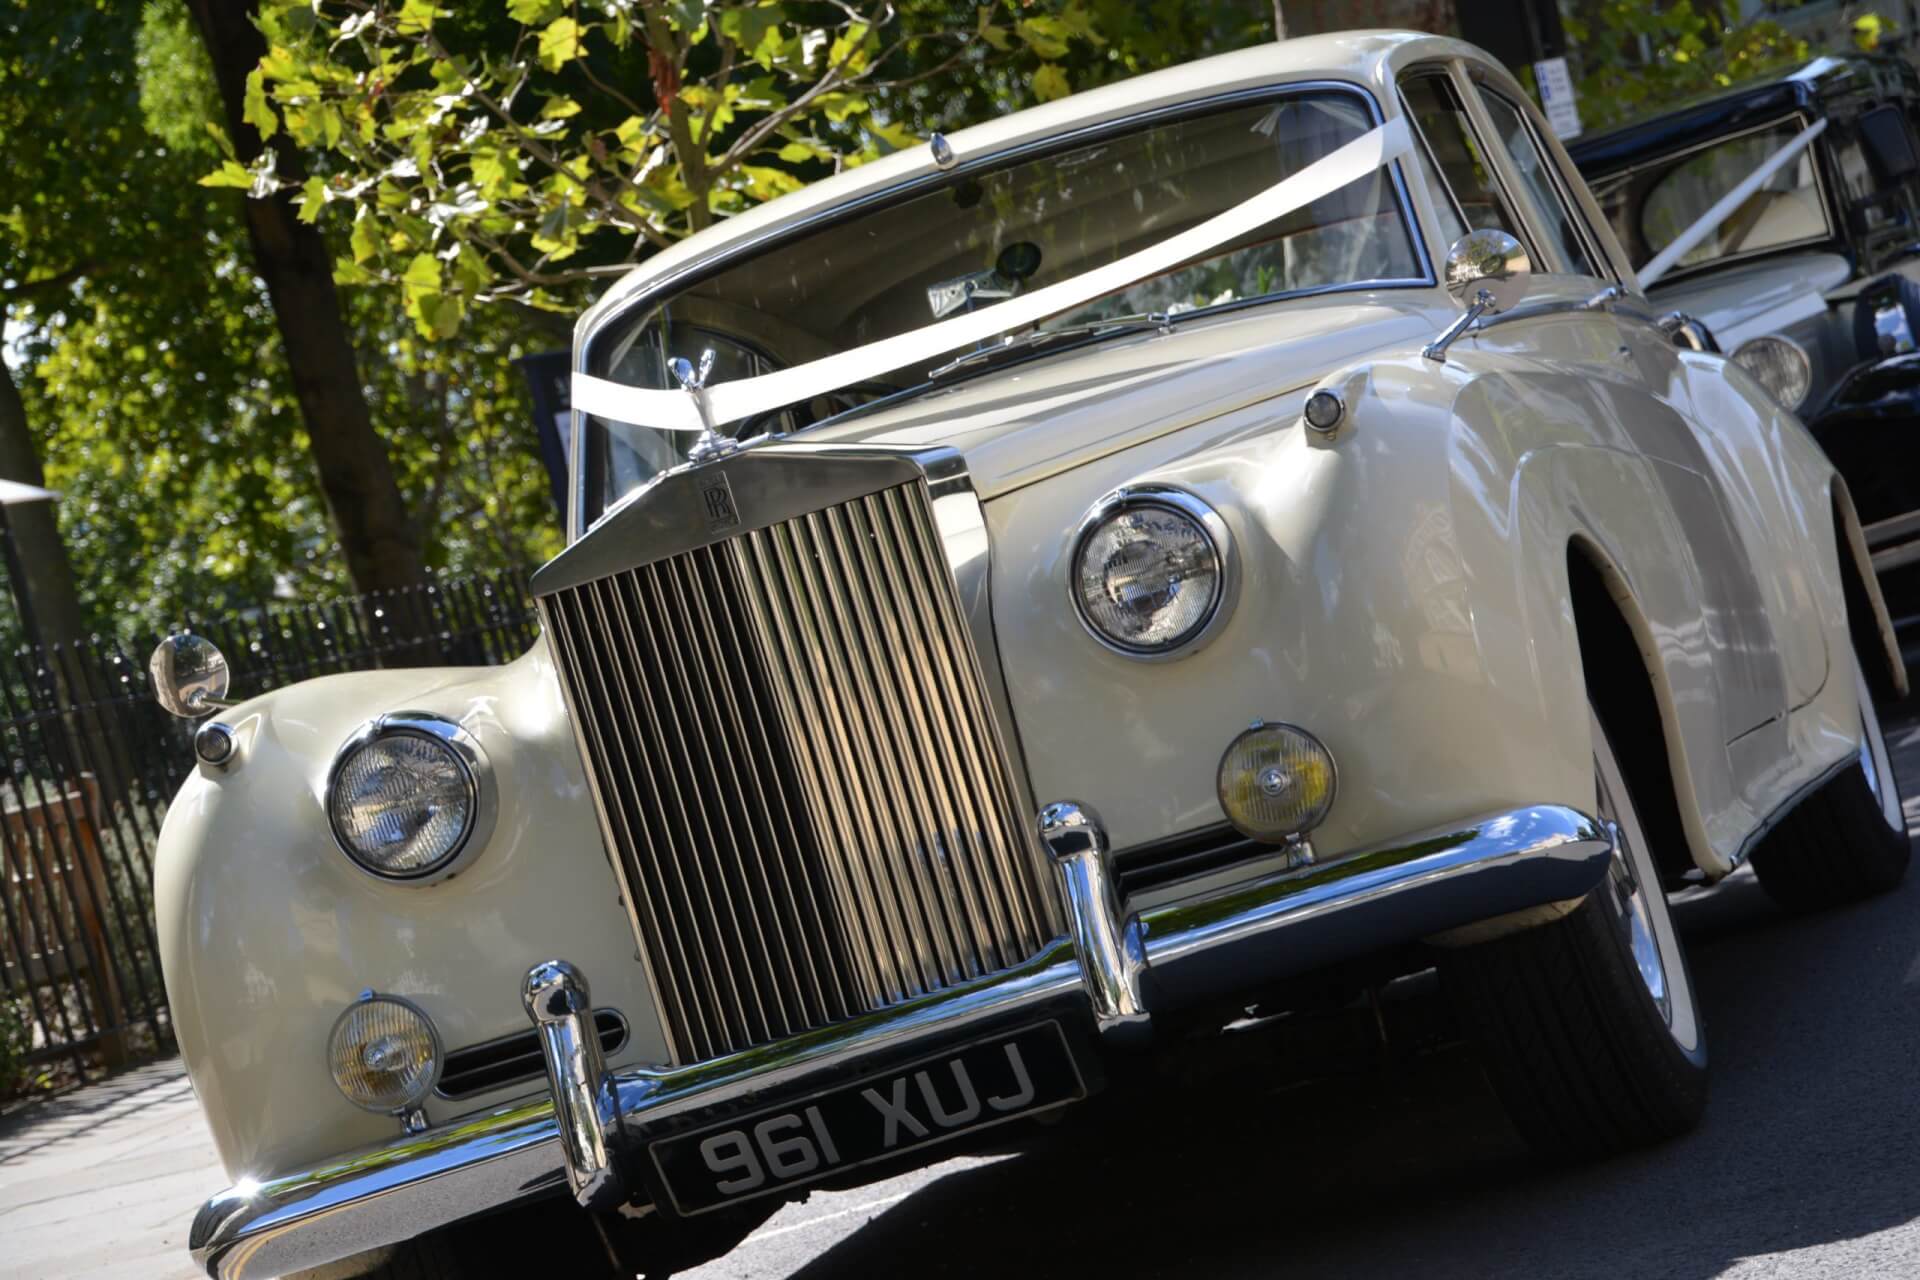 580 Vintage Rolls Royce Stock Photos Pictures  RoyaltyFree Images   iStock  Vintage car Rolls royce phantom Bentley